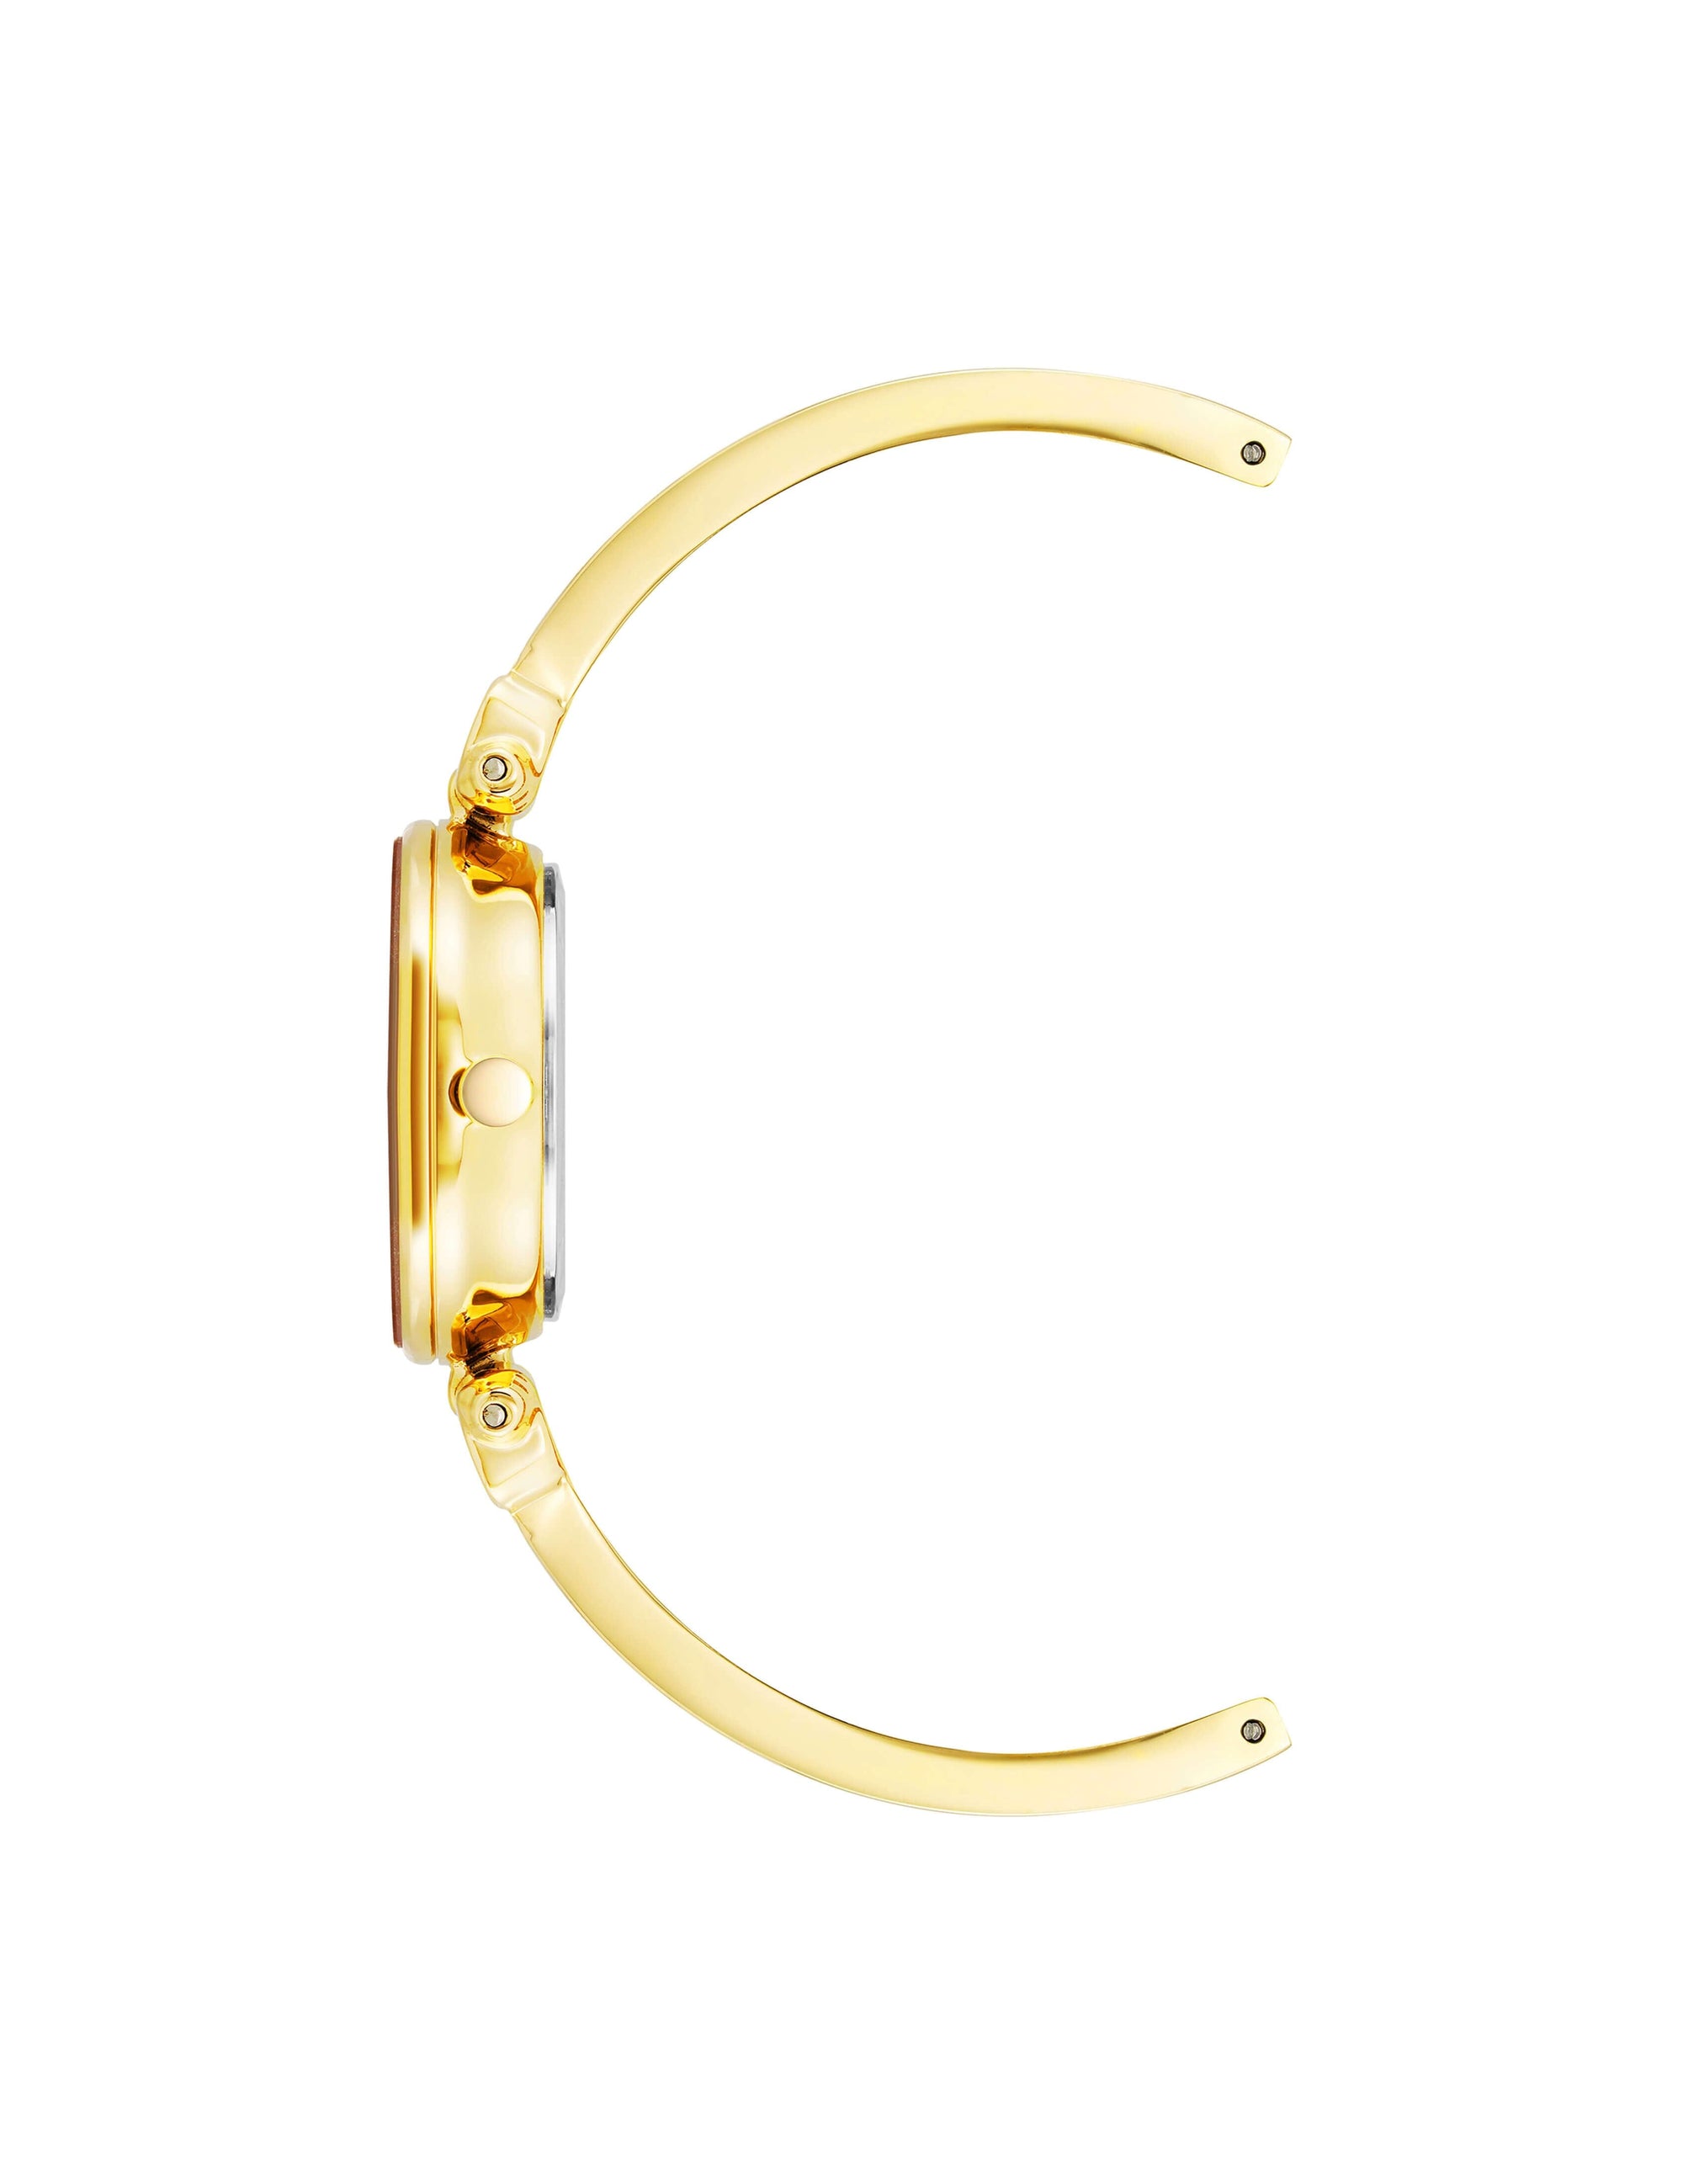 Anne Klein Women'S AK Premium Crystal-Accented Gold-Tone Bangle Watch